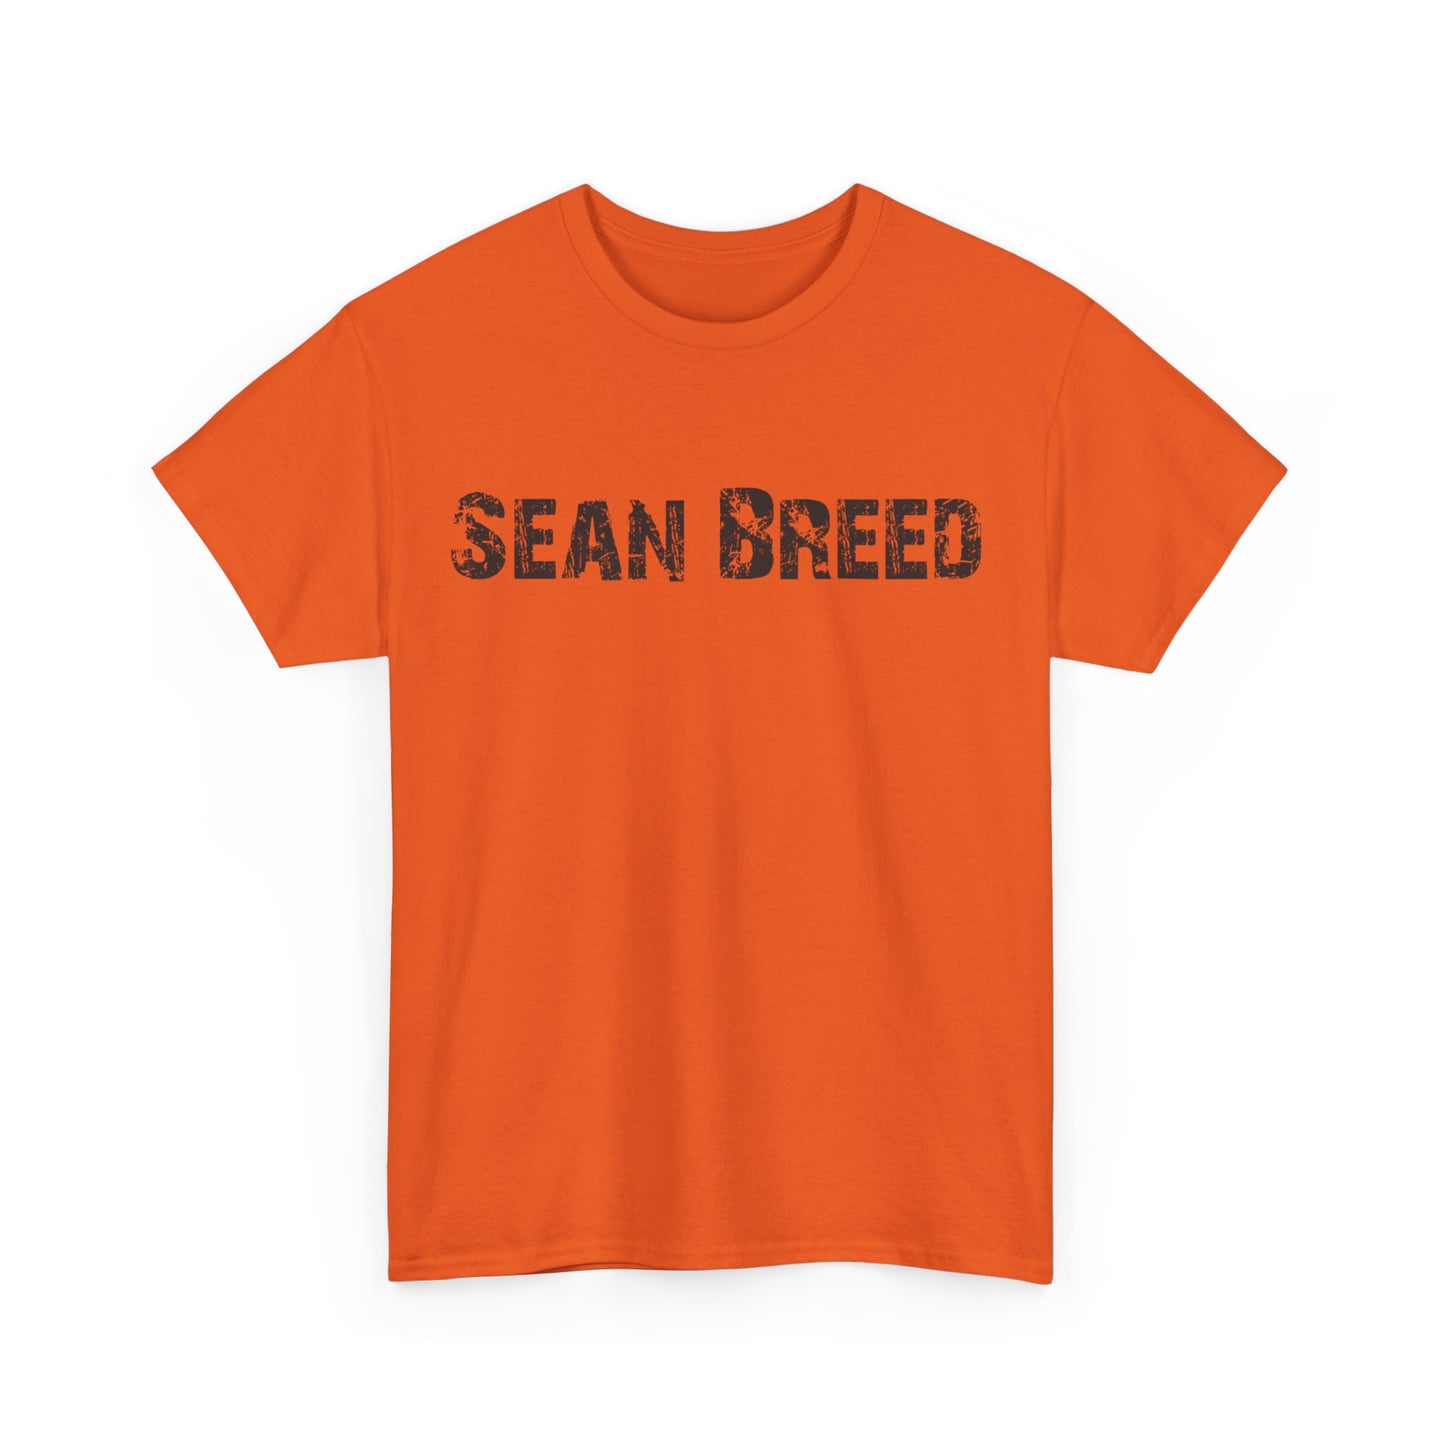 Sean Breed “Self Made” Unisex Heavy Cotton Tee